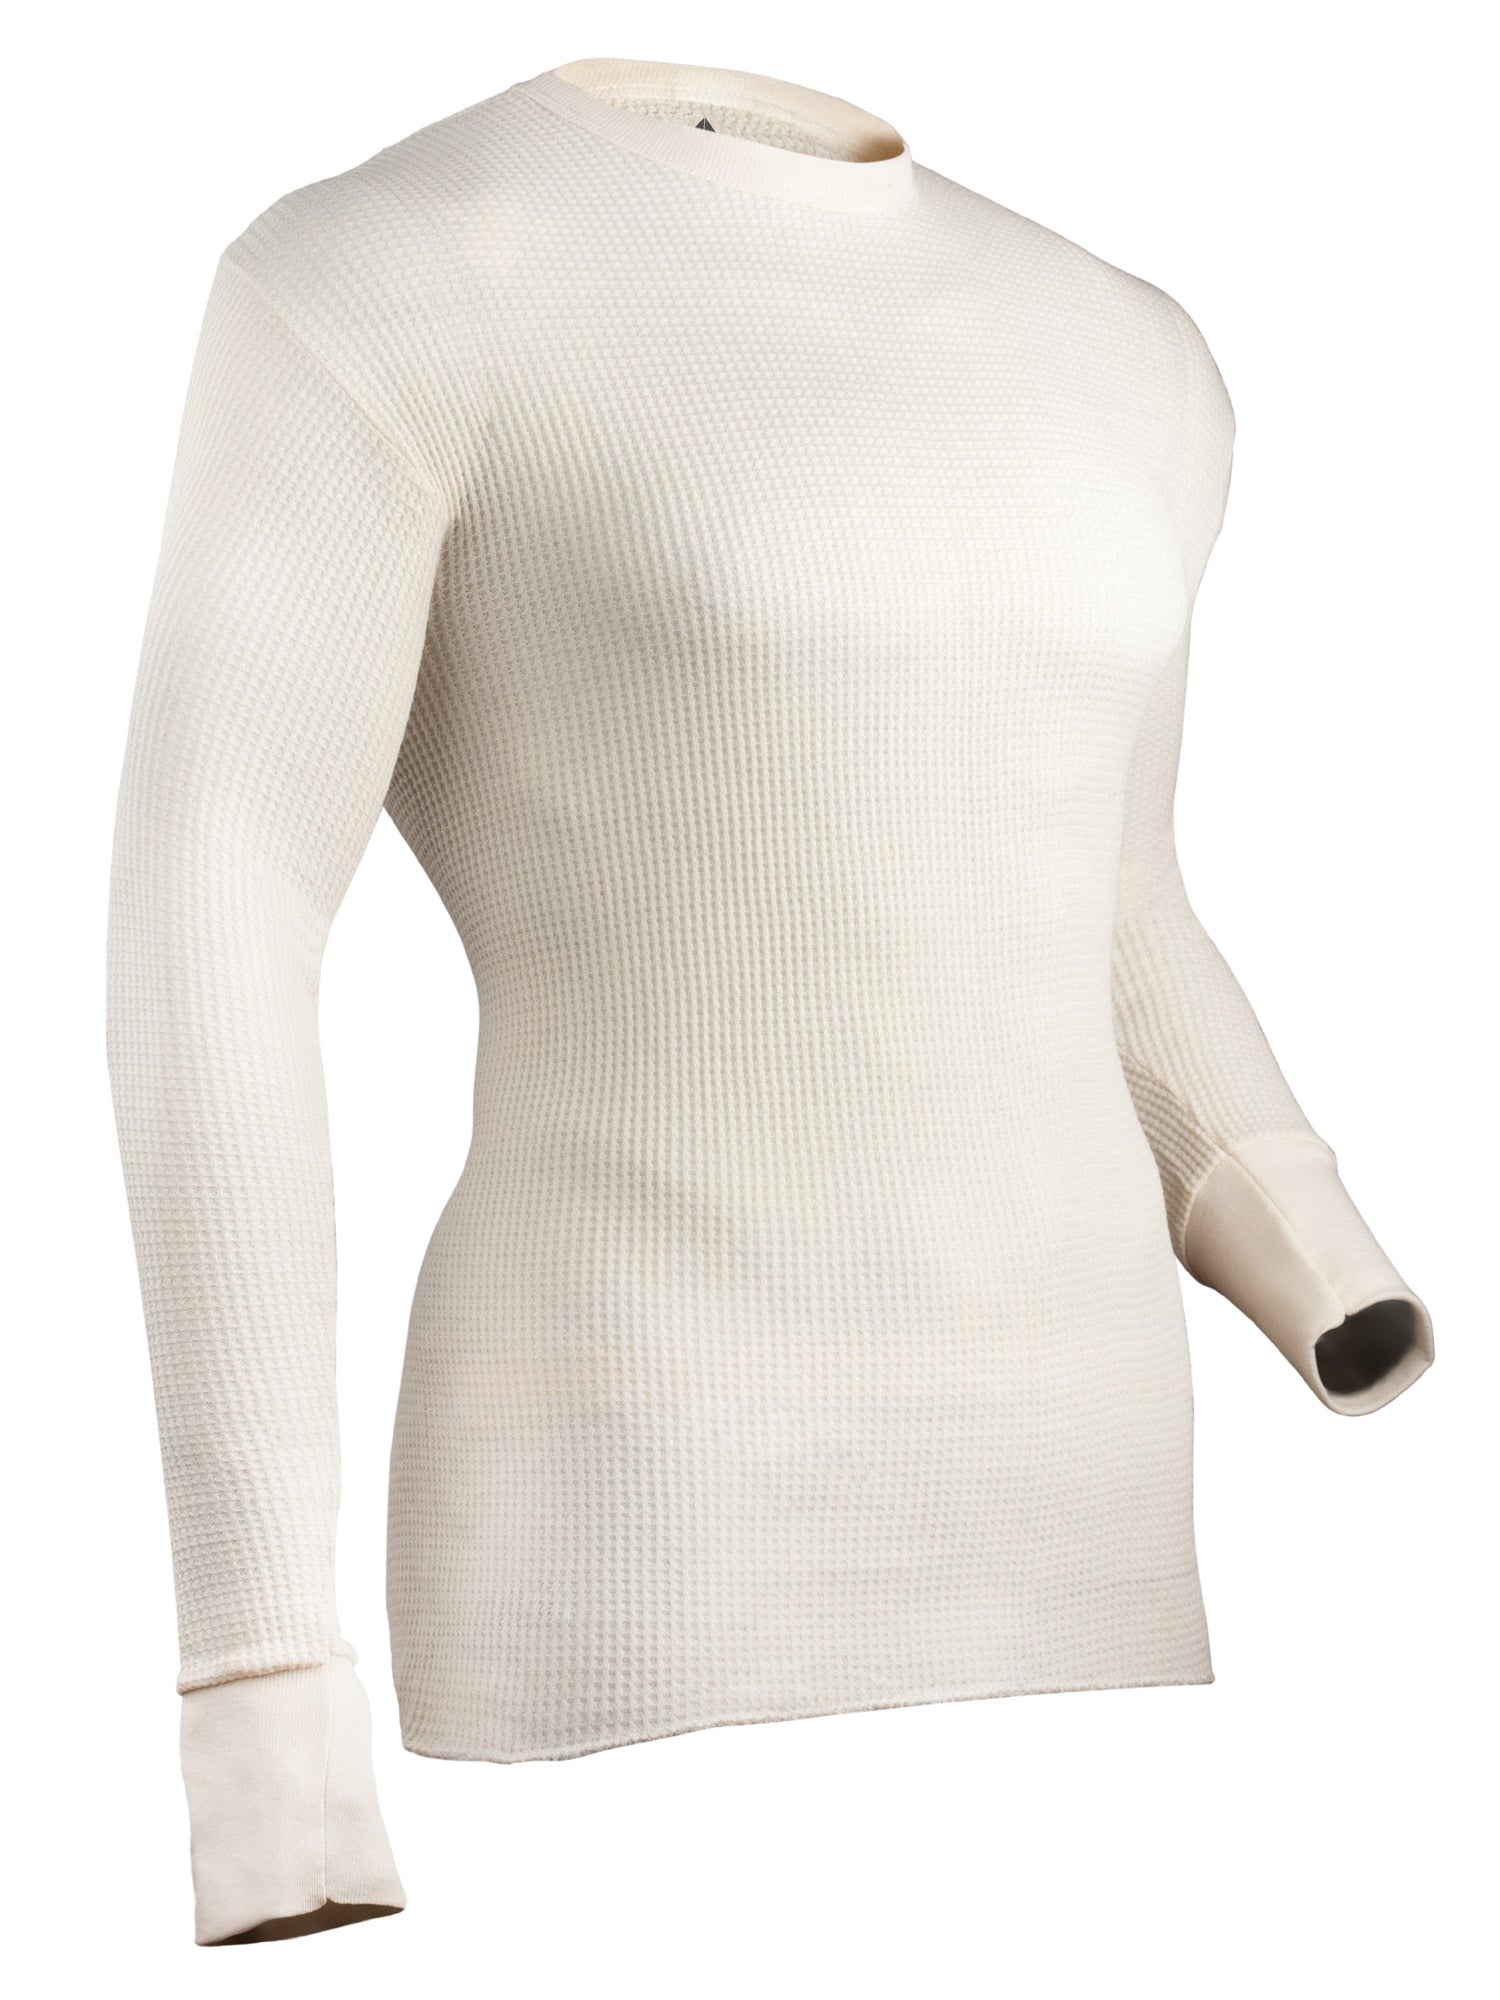 Indera Mills 100% Cotton Heavyweight Thermal Crew Shirt - Regular Sizes